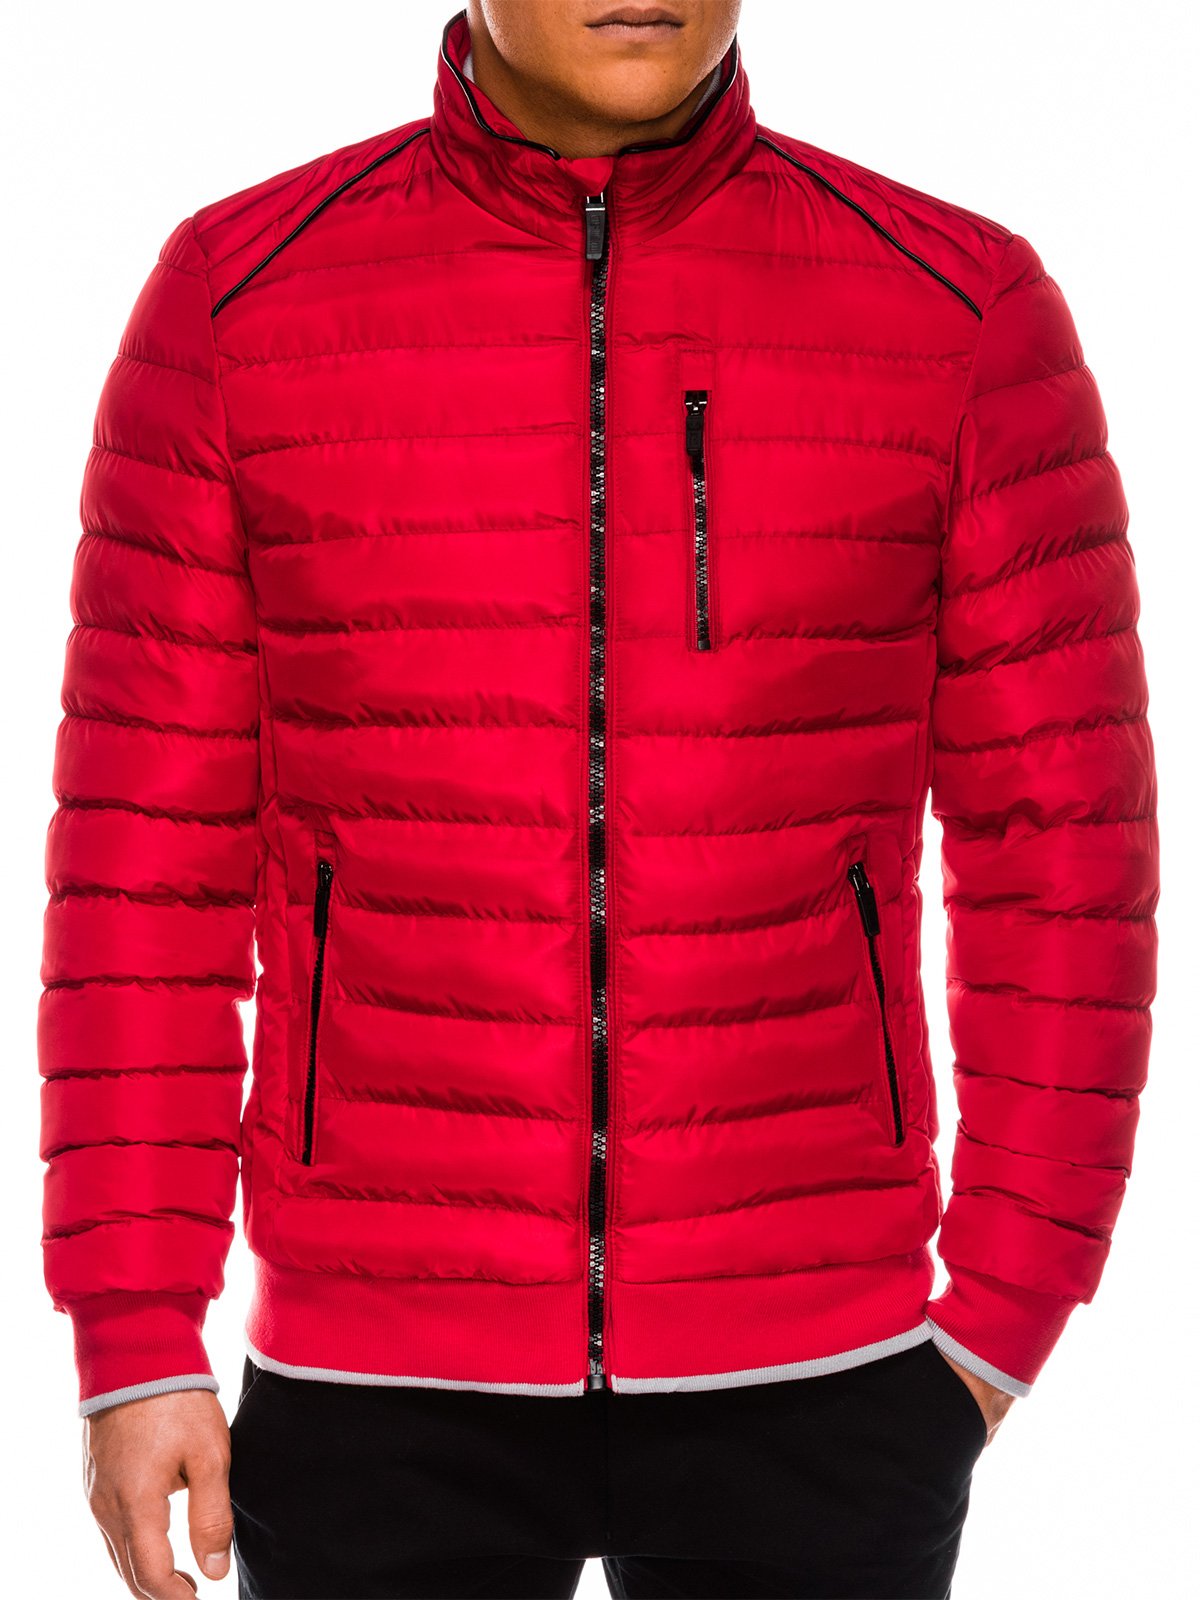 Men's winter jacket C422 - red | MODONE wholesale - Clothing For Men